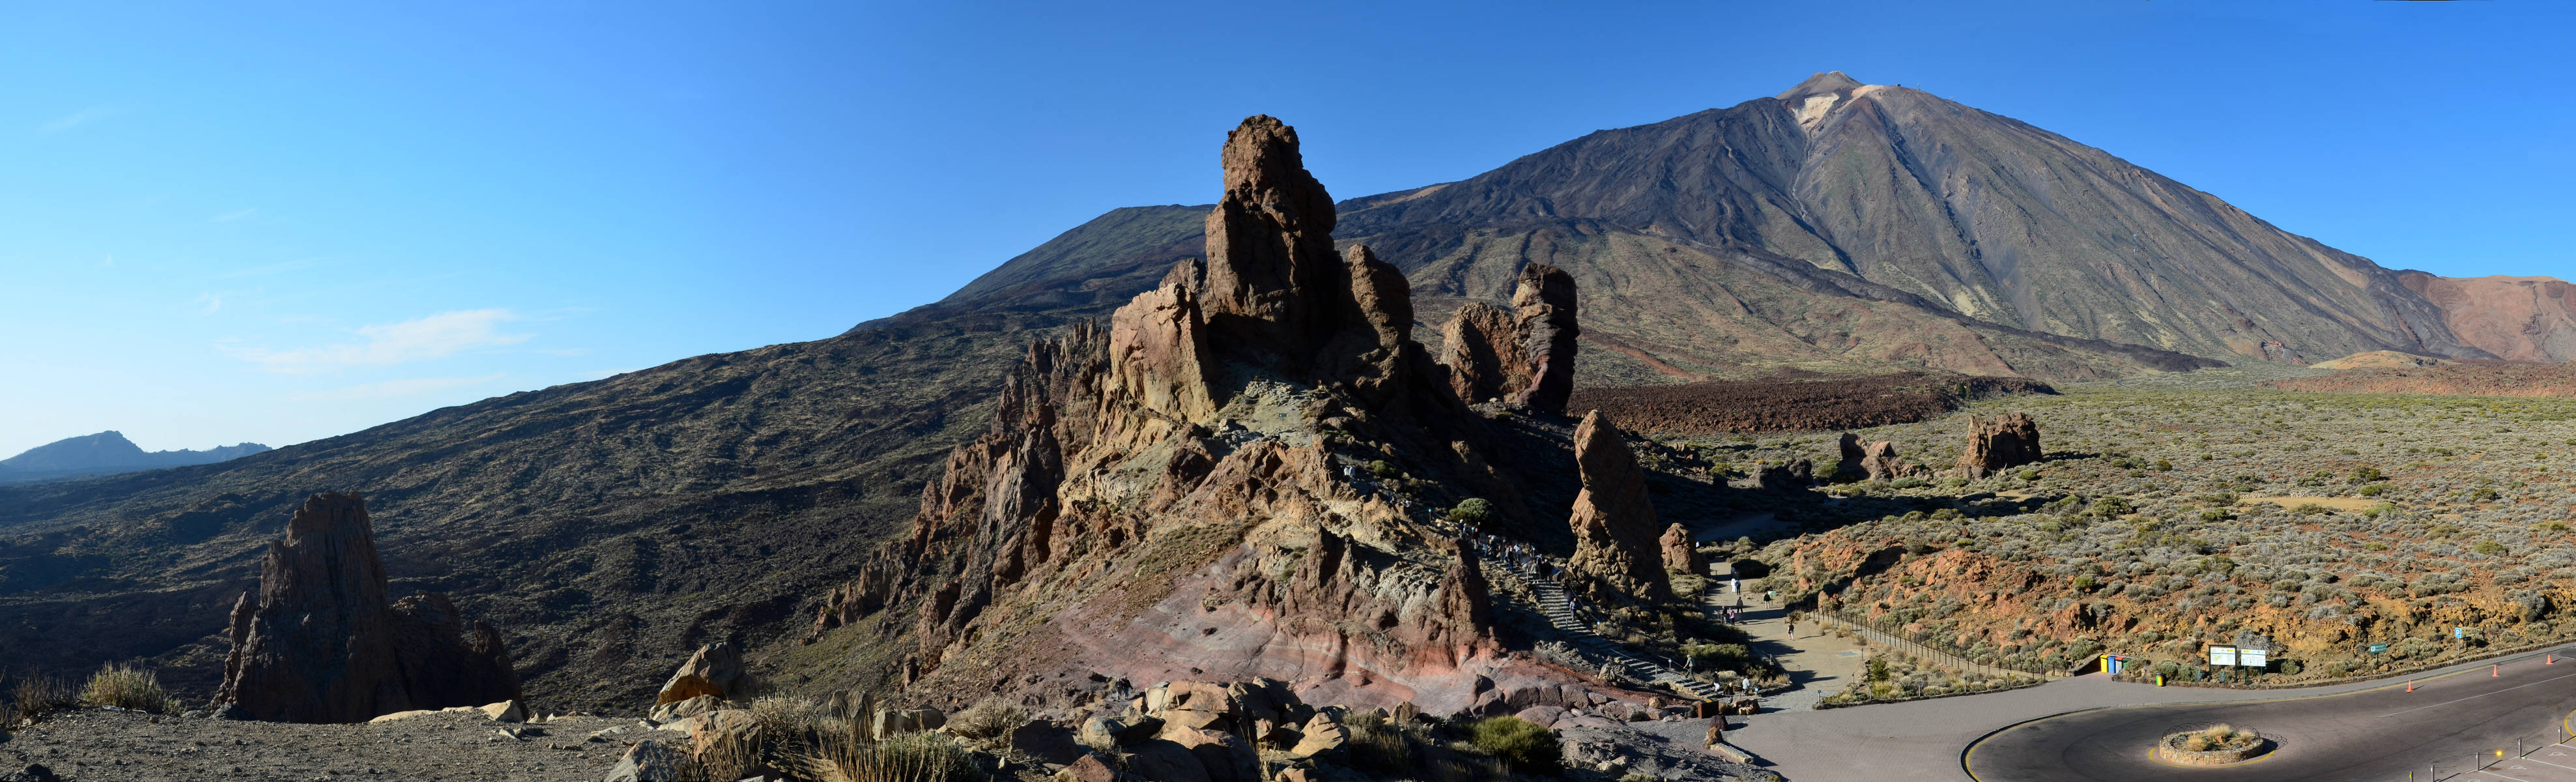 Las Rochas and Teide - Tenerife - Canary Islands.jpg